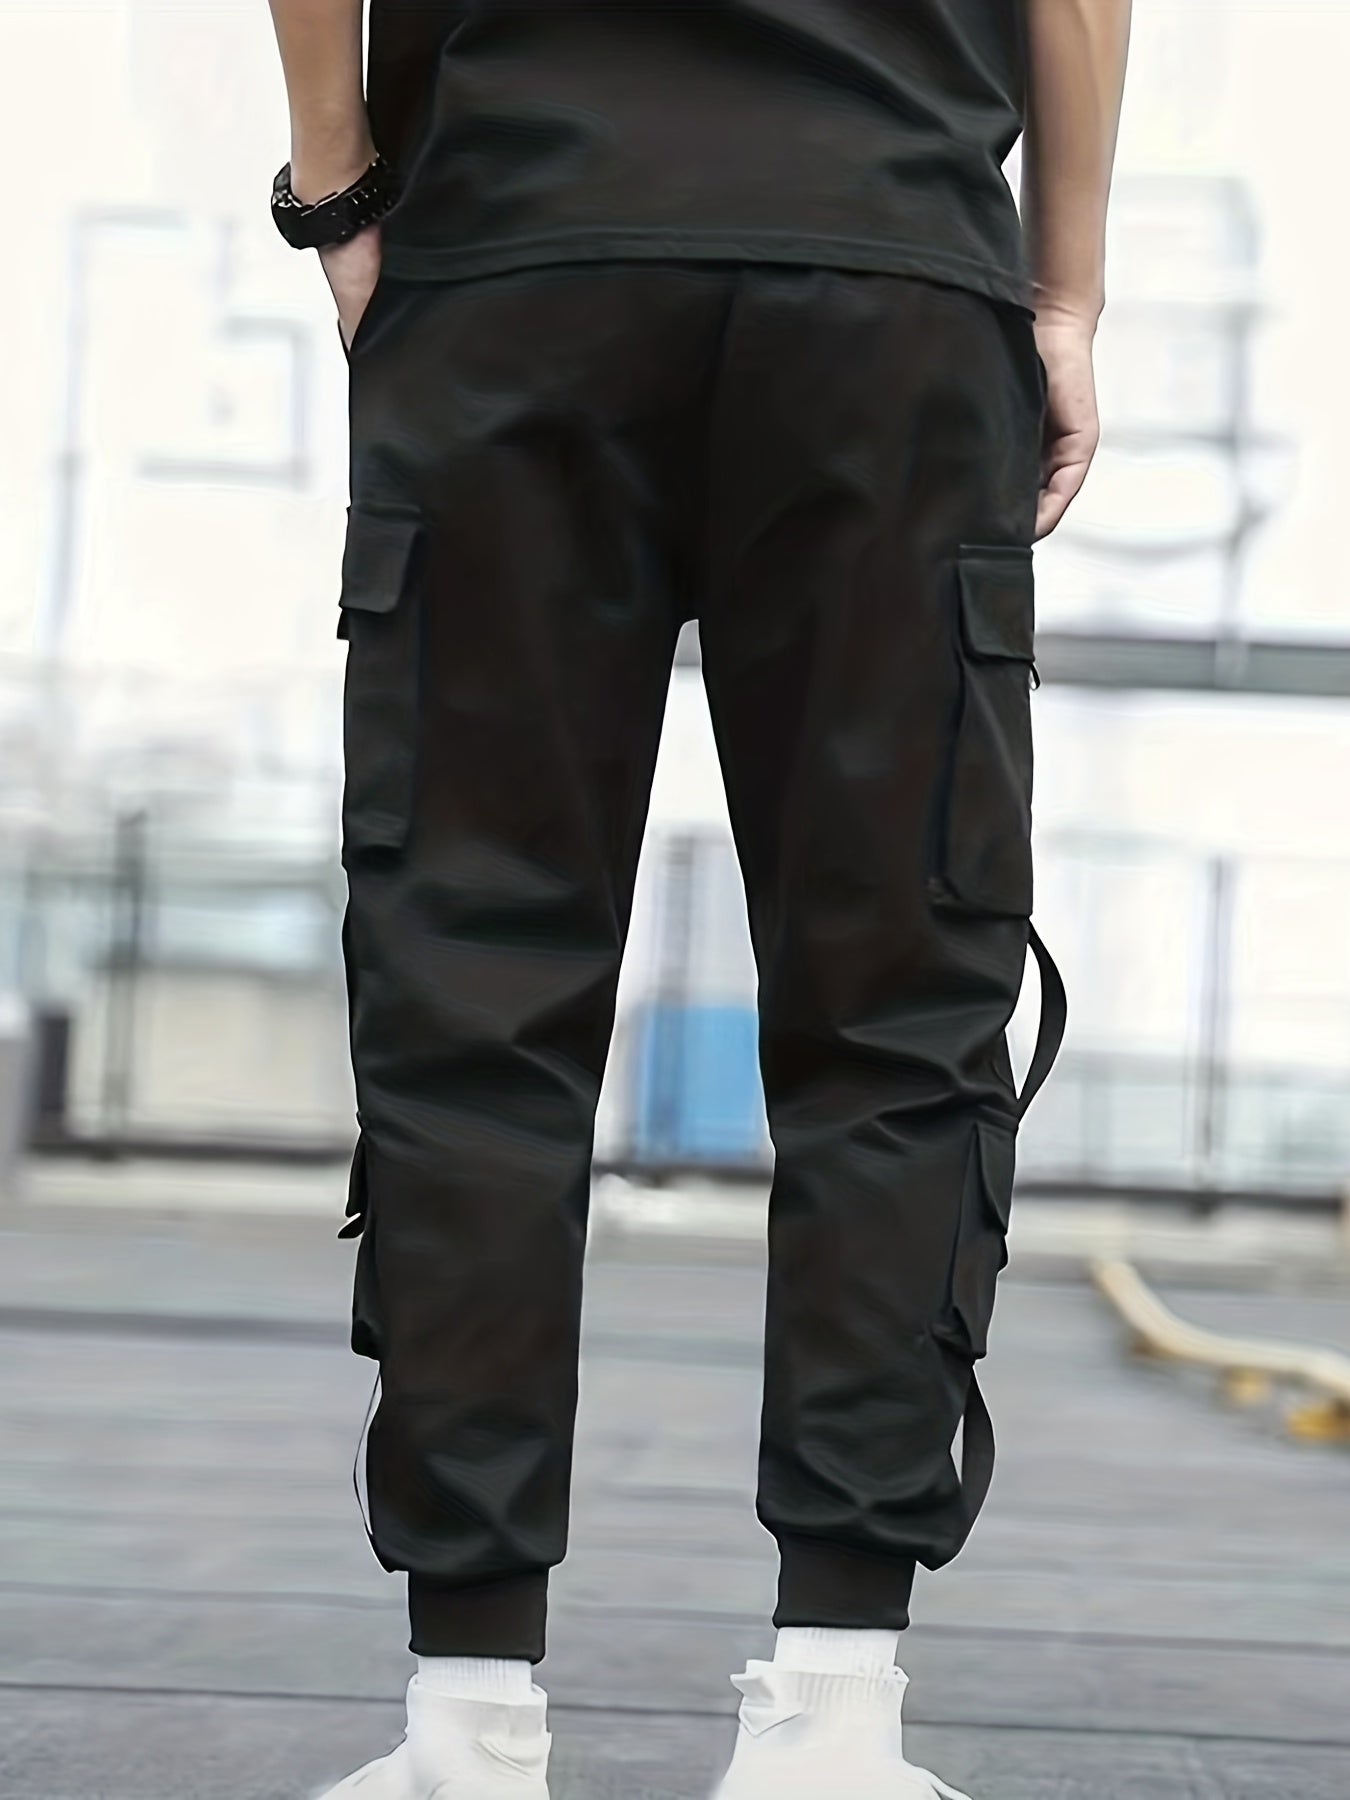 Ribbon Design, Men's Drawstring Overalls With Pockets, Loose Trendy Comfy Jogger Pants